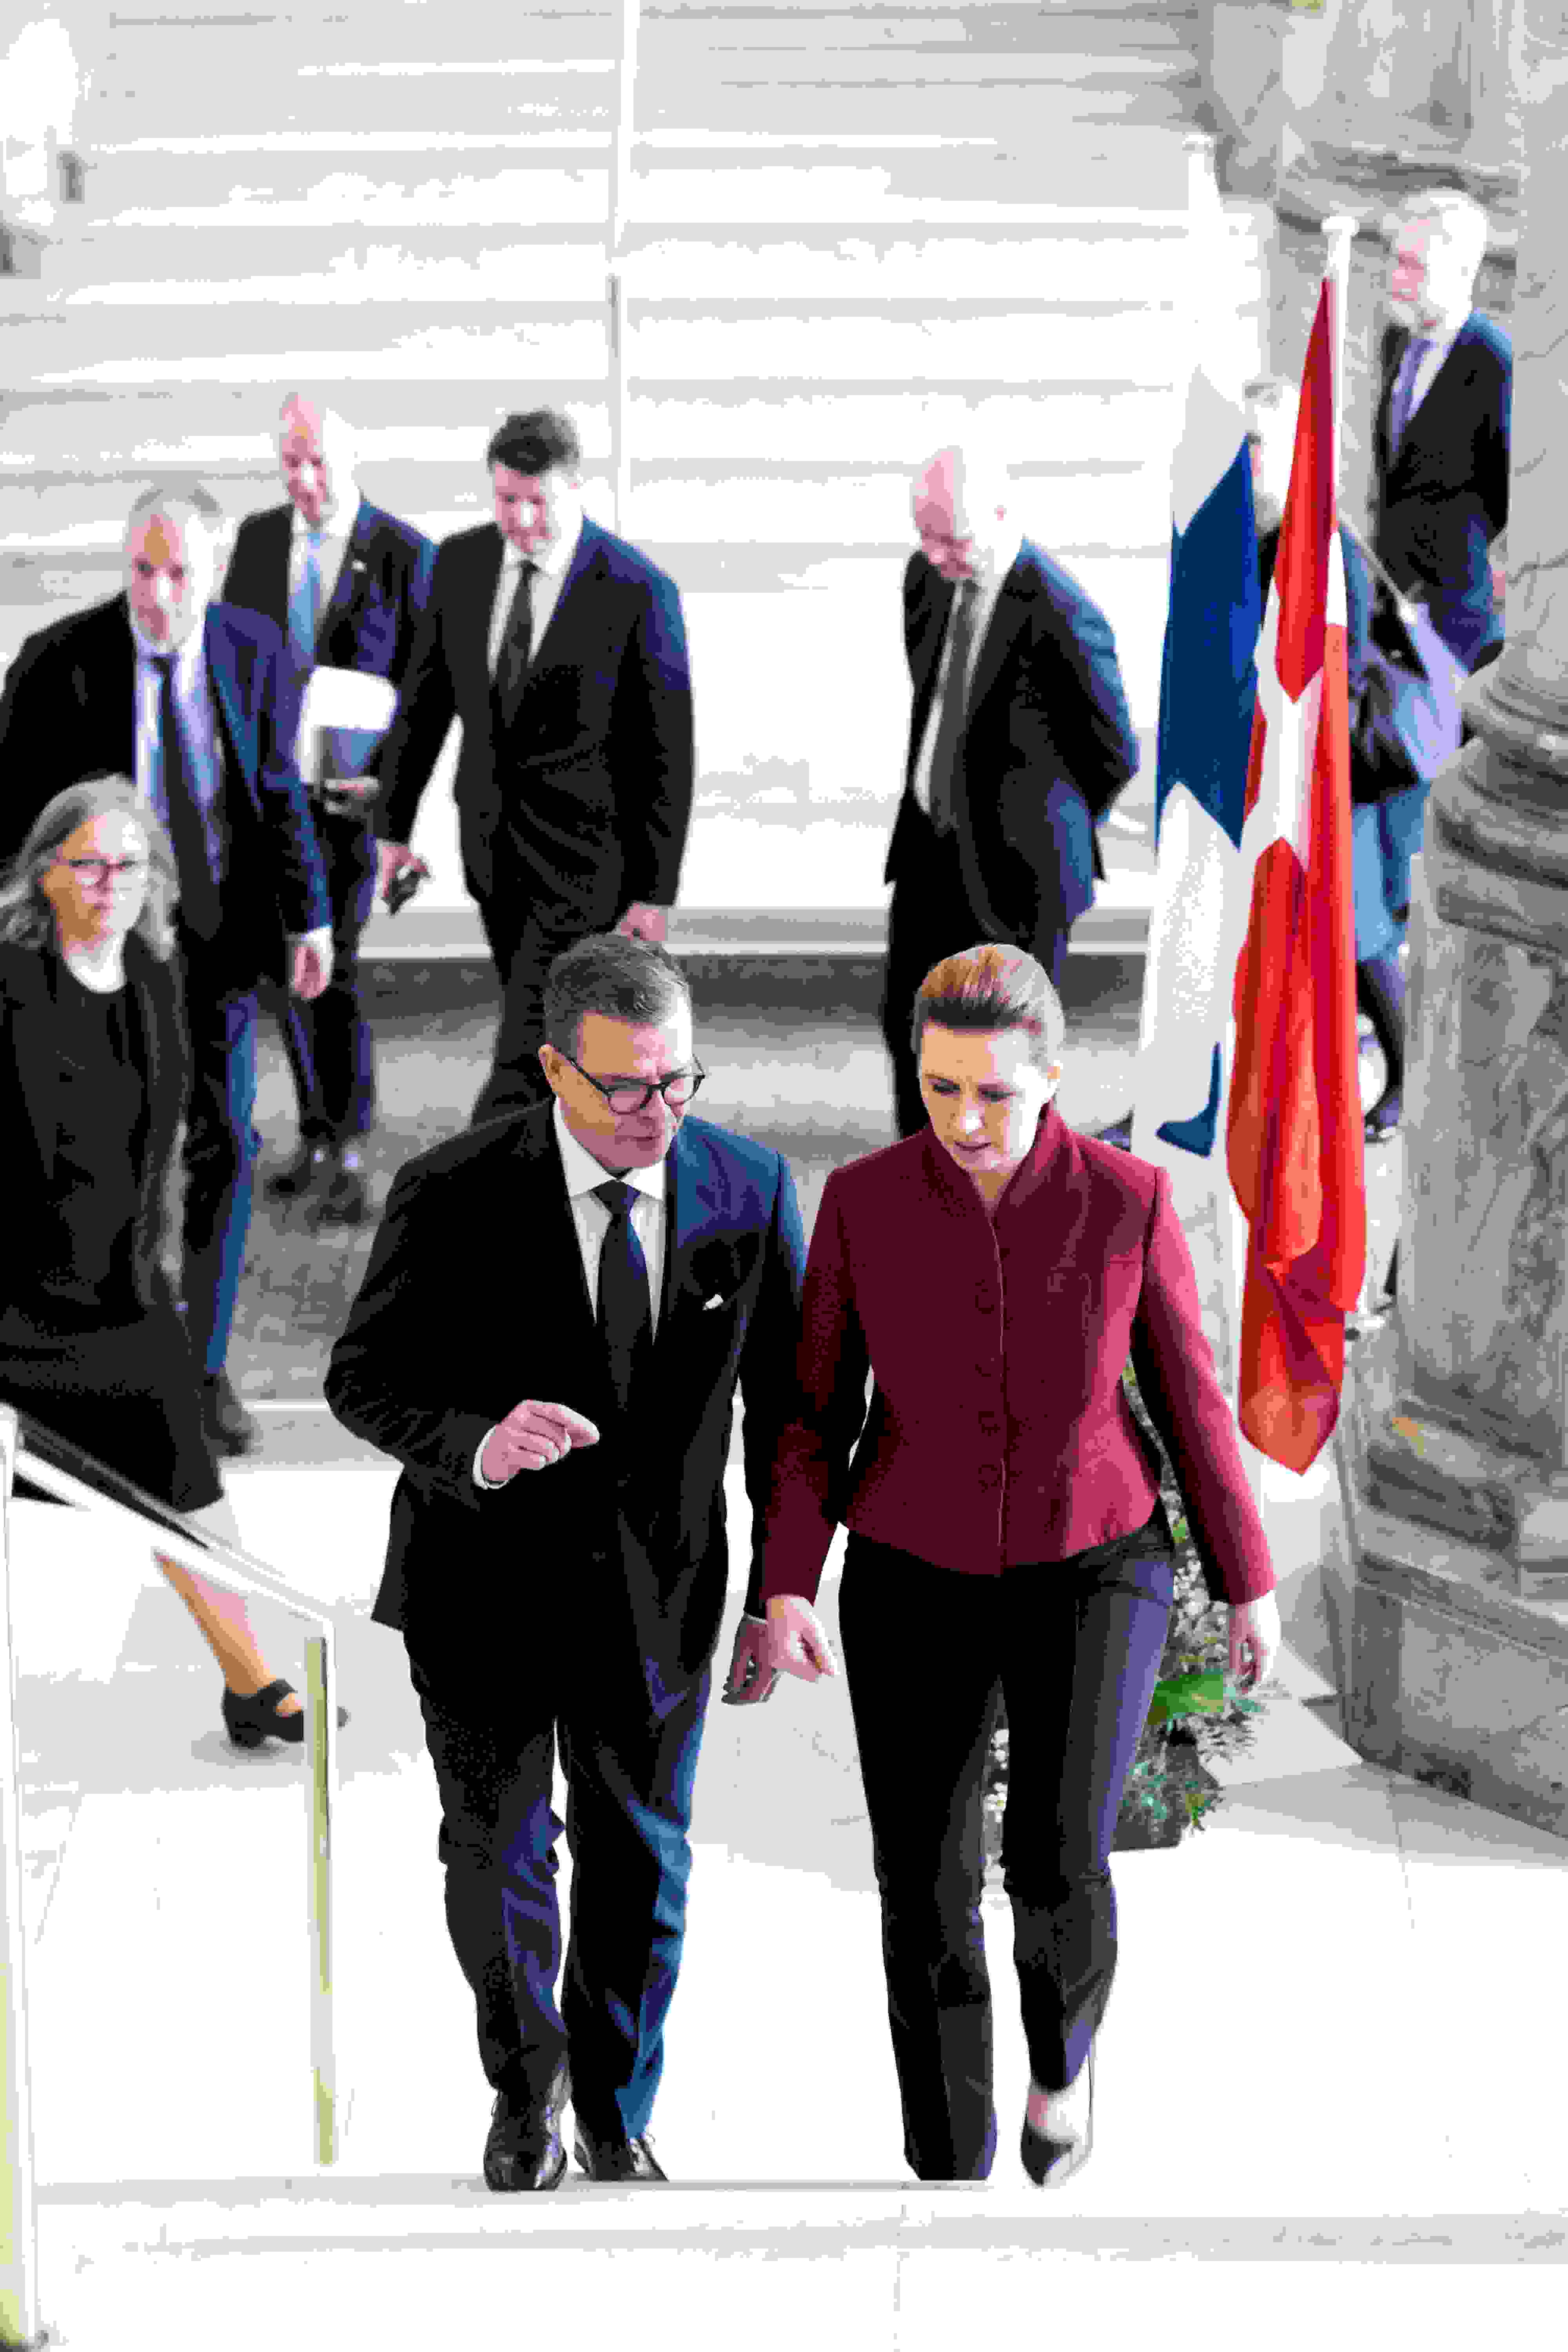 Statsminister Mette Frederiksen på vej op ad trappen med den finske statsminister Petteri Orpo